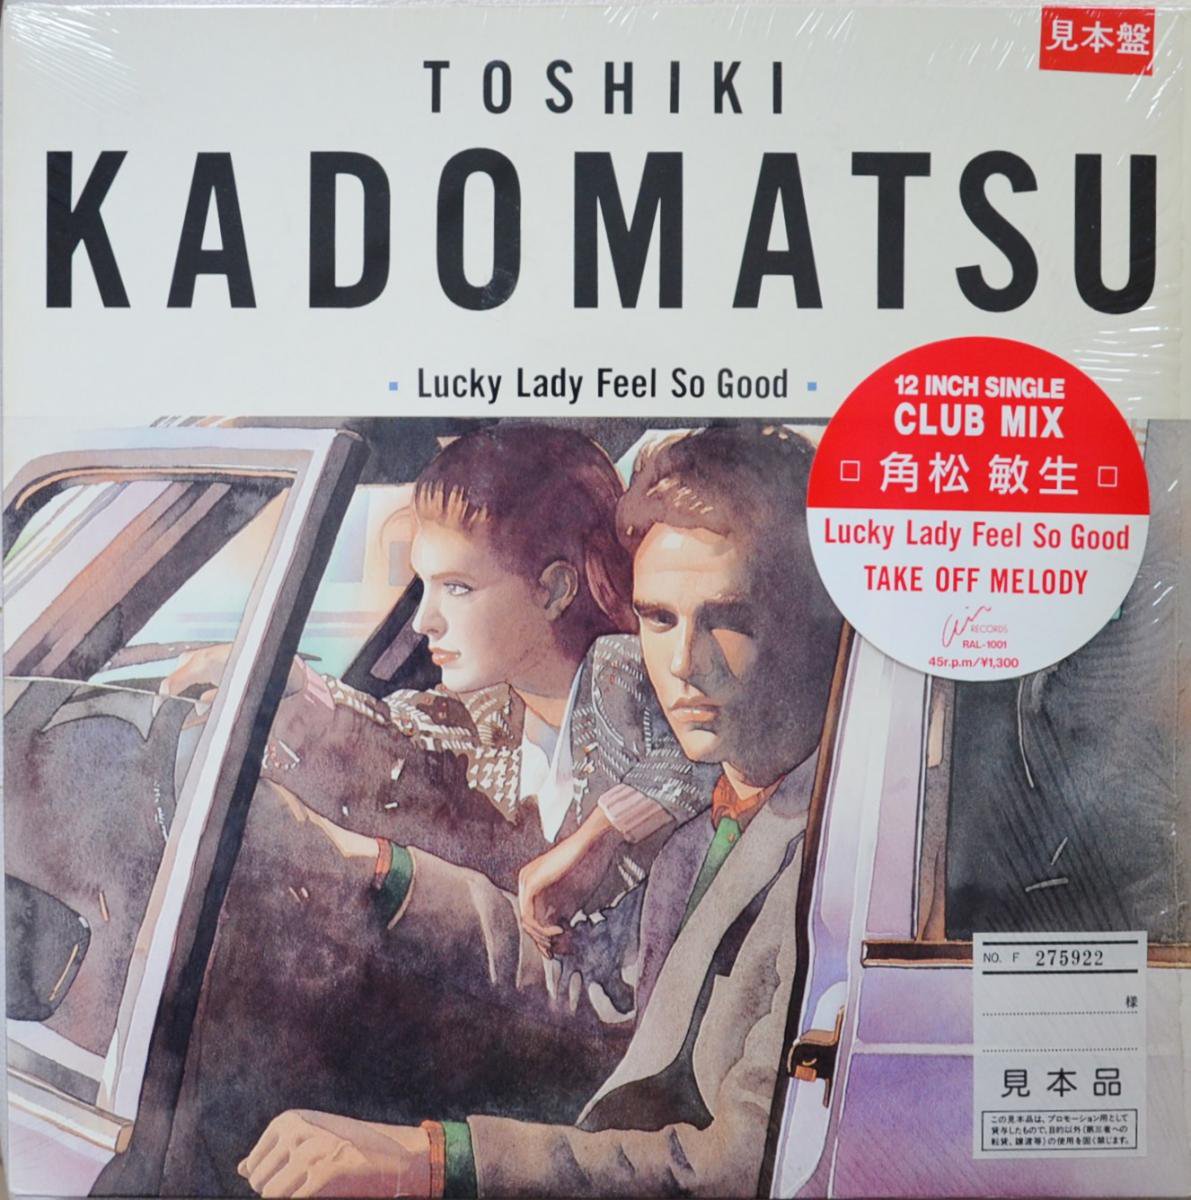 Ѿ TOSHIKI KADOMATSU / LUCKY LADY FEEL SO GOOD (12